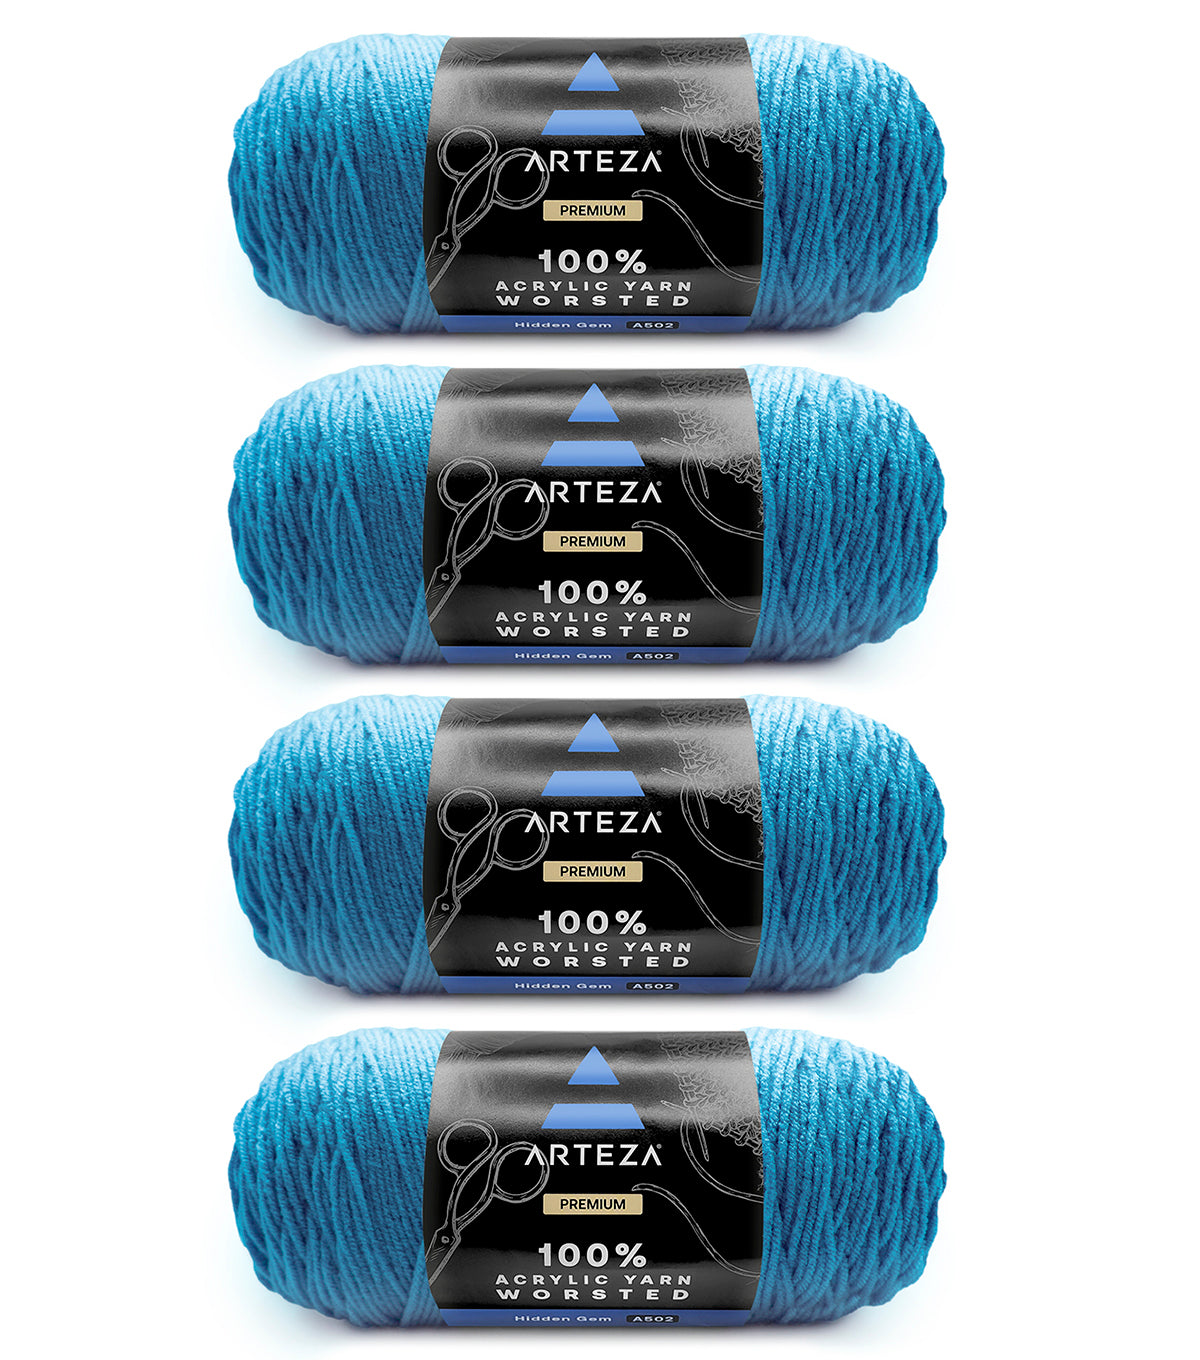  6 Pack Crochet Knitting Acrylic Yarn Sparkle Metallic